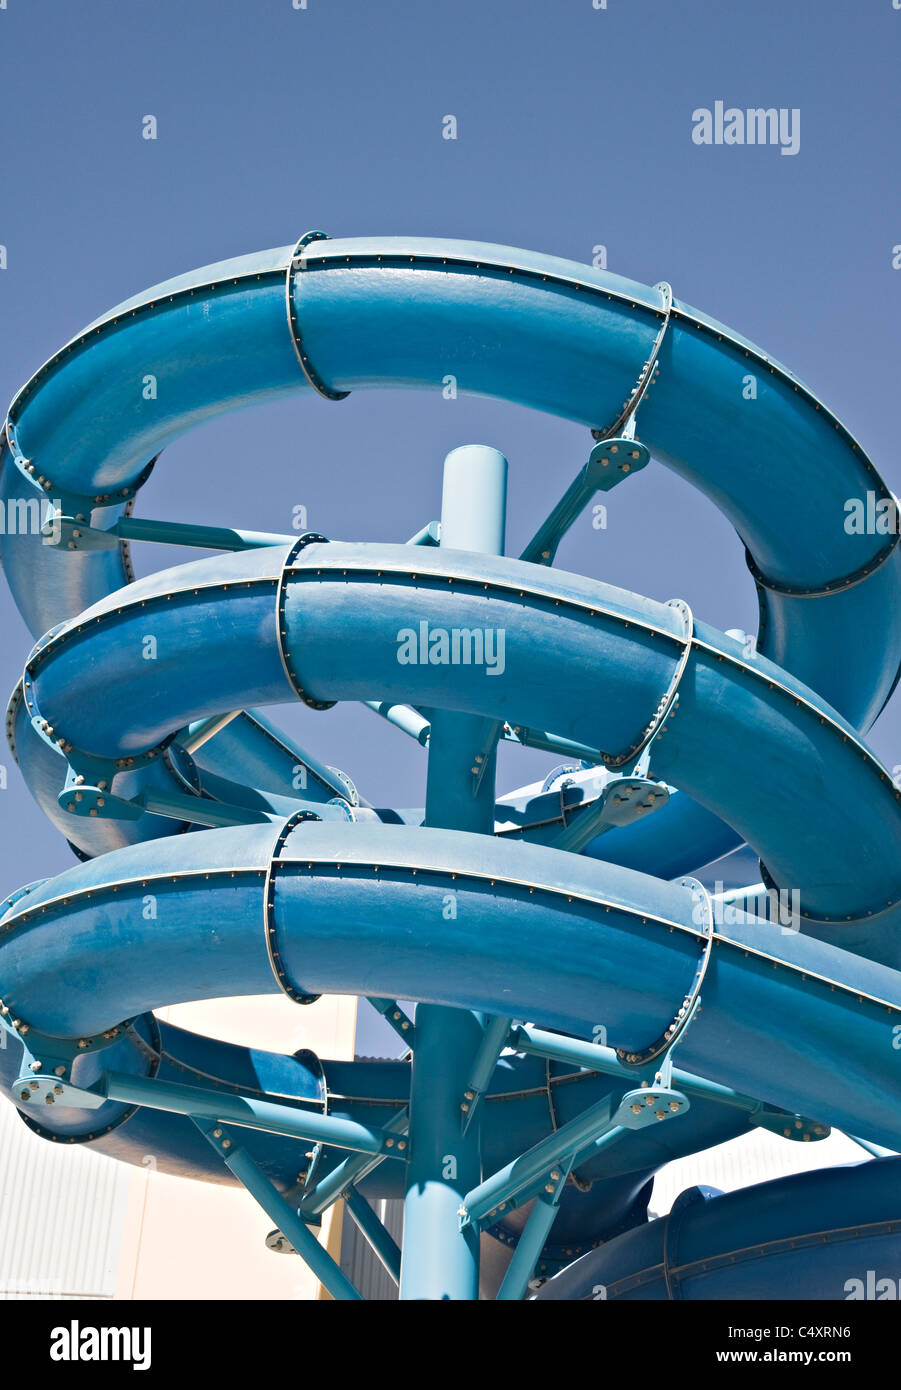 Enclosed Water Shoot Slide in Theme Park Ride at Coastal Resort of Glenelg Suburb of Adelaide South Australia SA Stock Photo